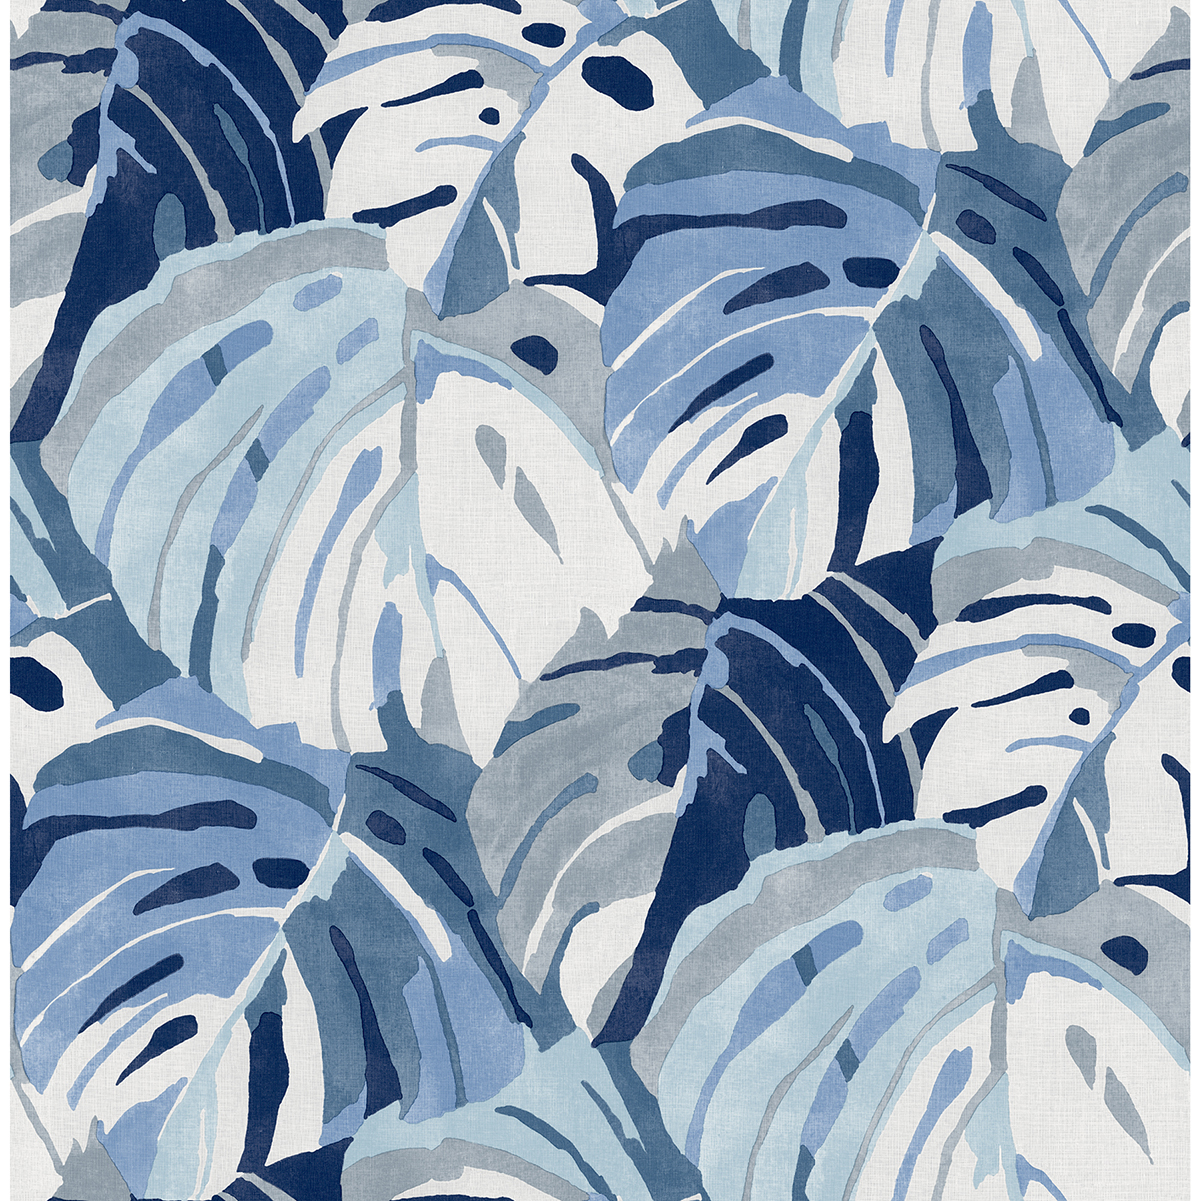 2969-26007 - Samara Blue Monstera Leaf Wallpaper - by A-Street Prints